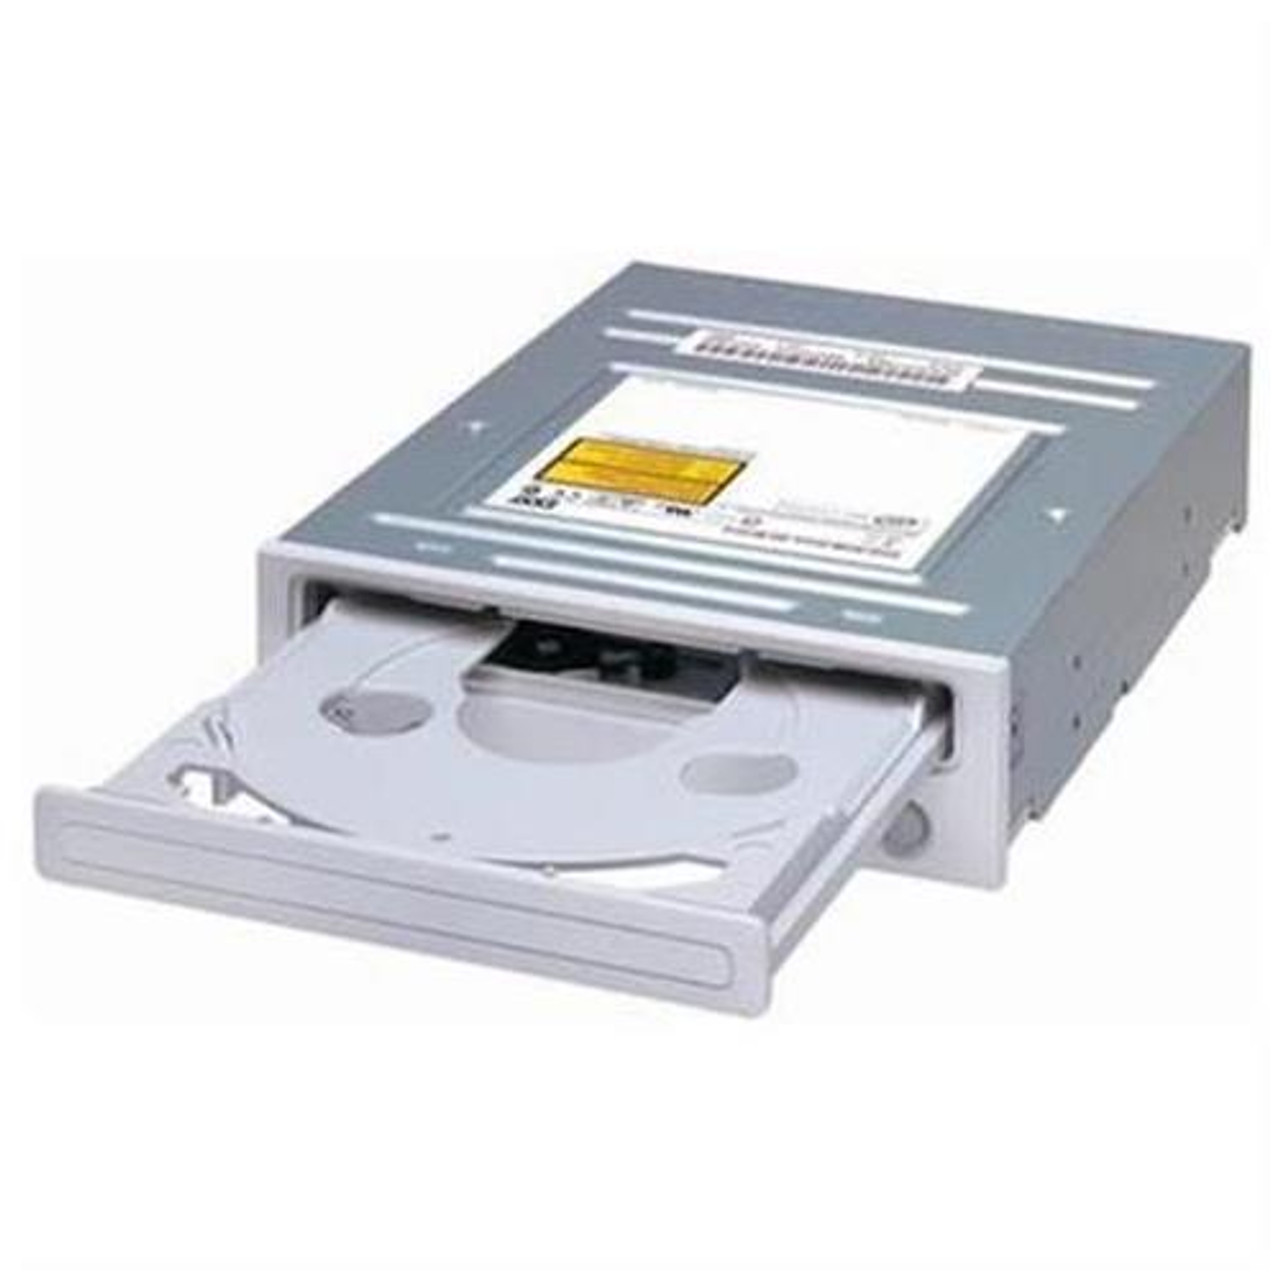 KU.00801.035 - Acer KU.00801.035 Internal DVD-Writer - DVD-RAM